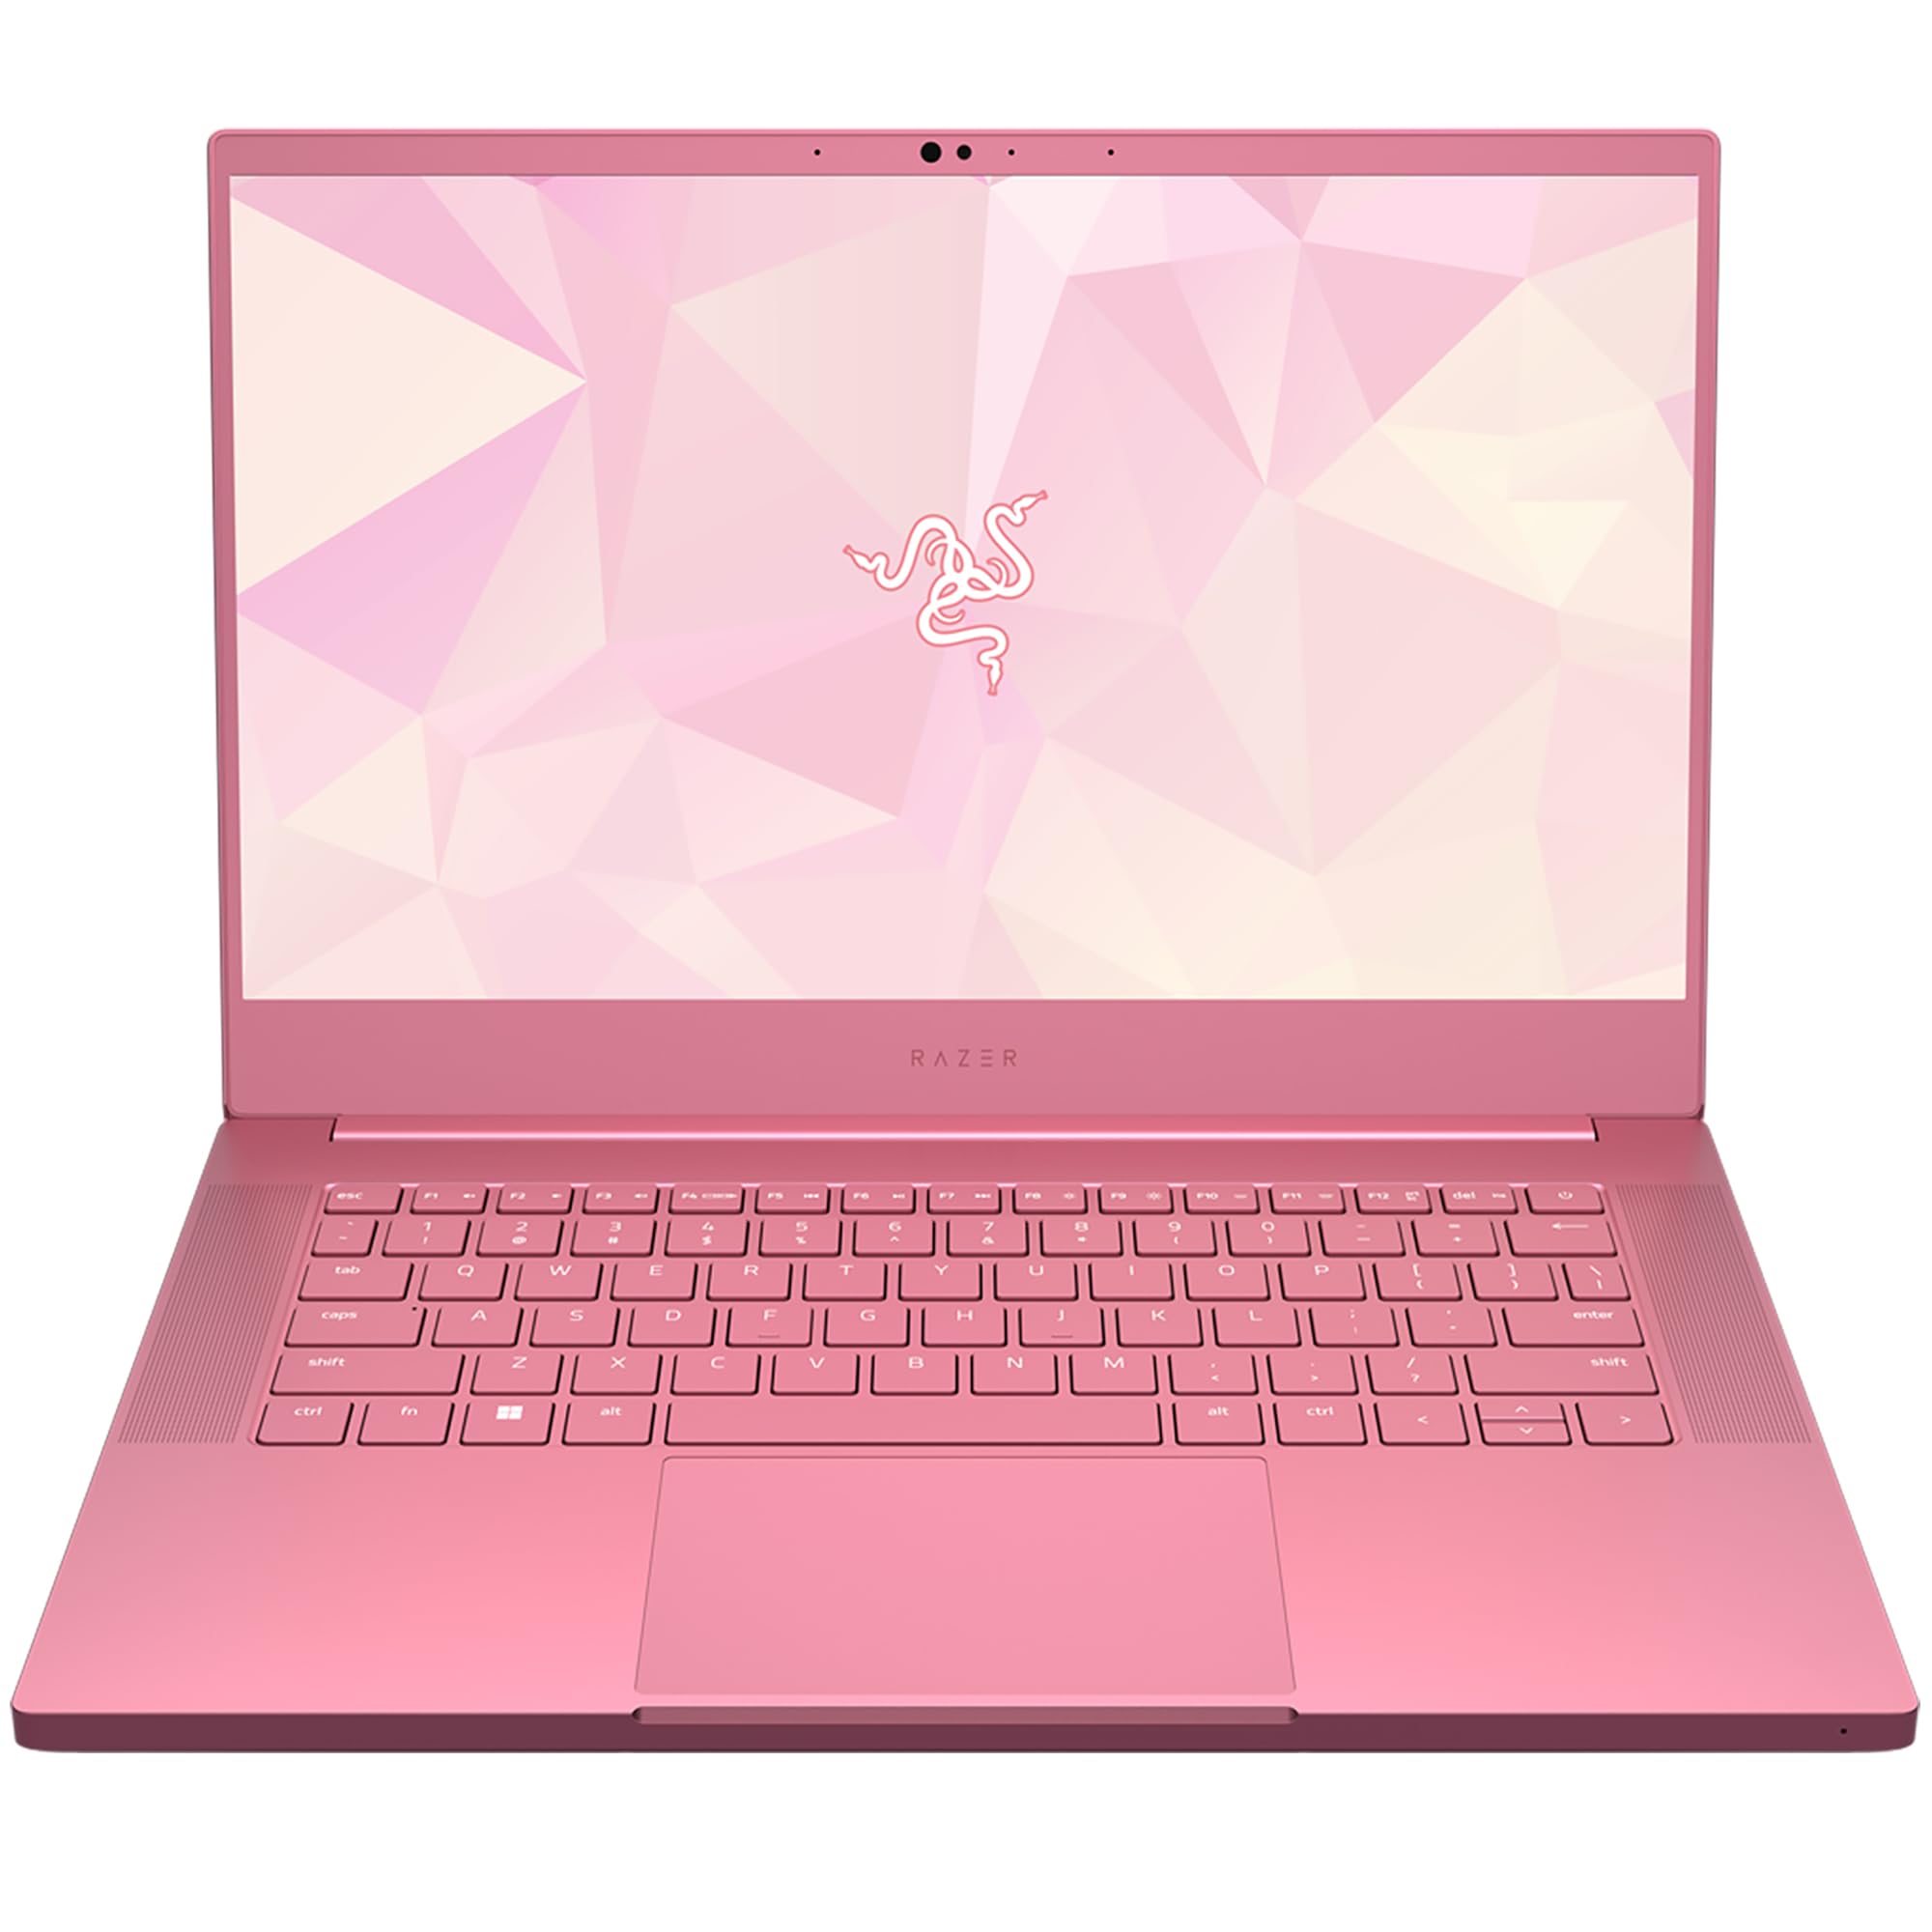 pink razer laptop